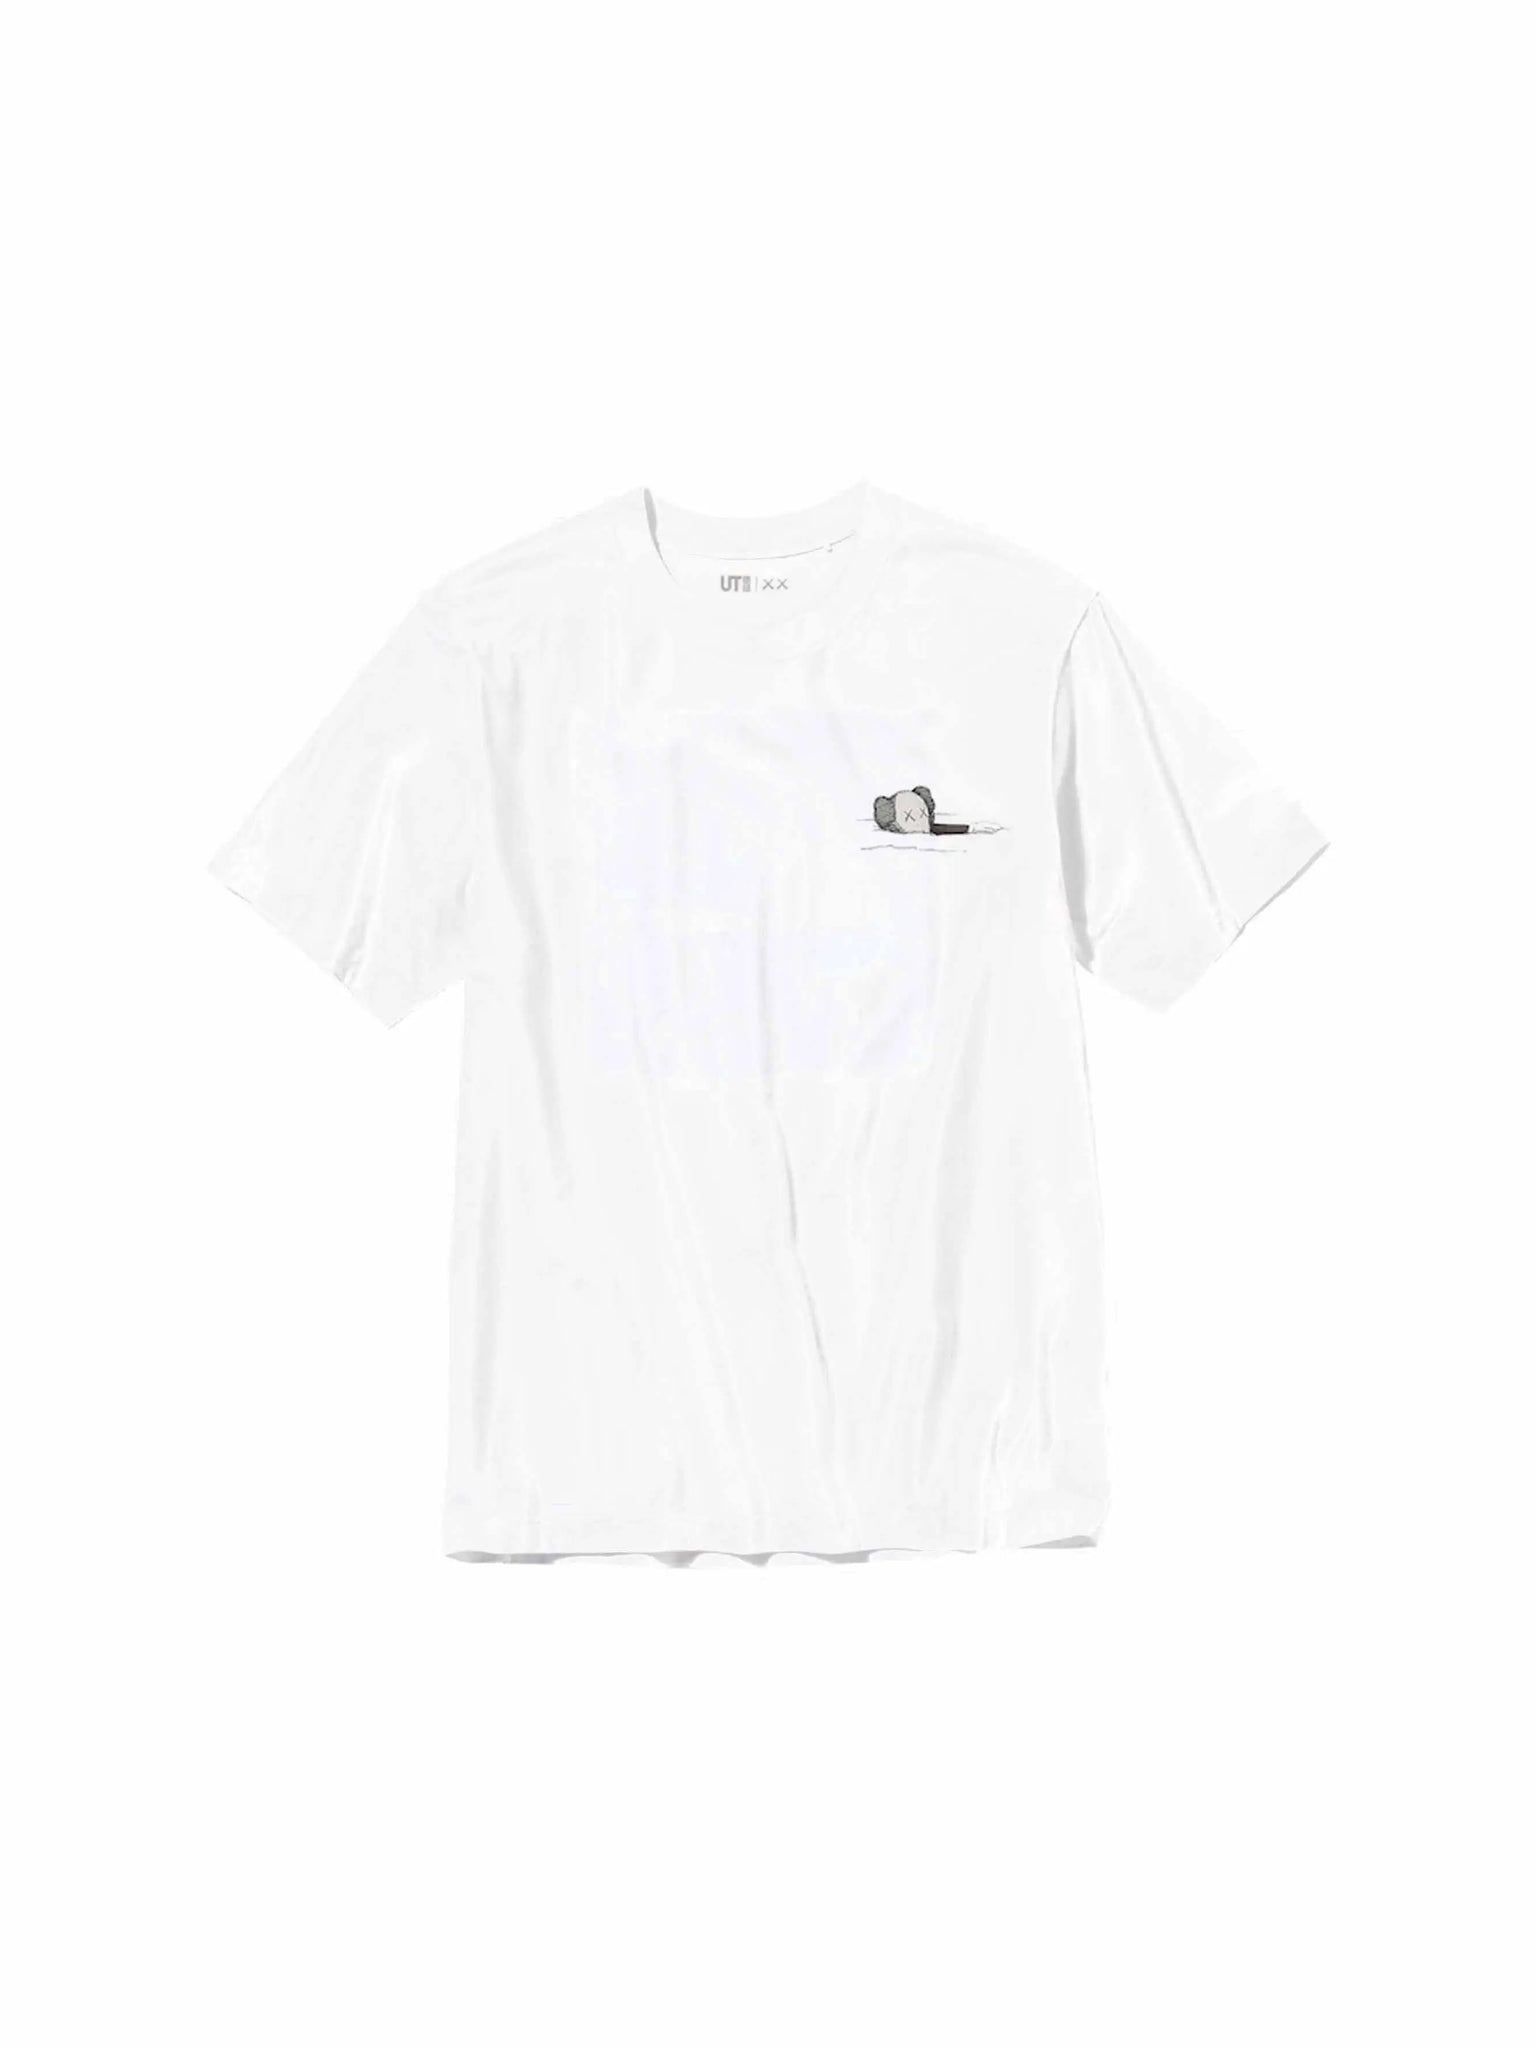 KAWS x Uniqlo UT Short Sleeve Artbook Cover T-shirt White Prior